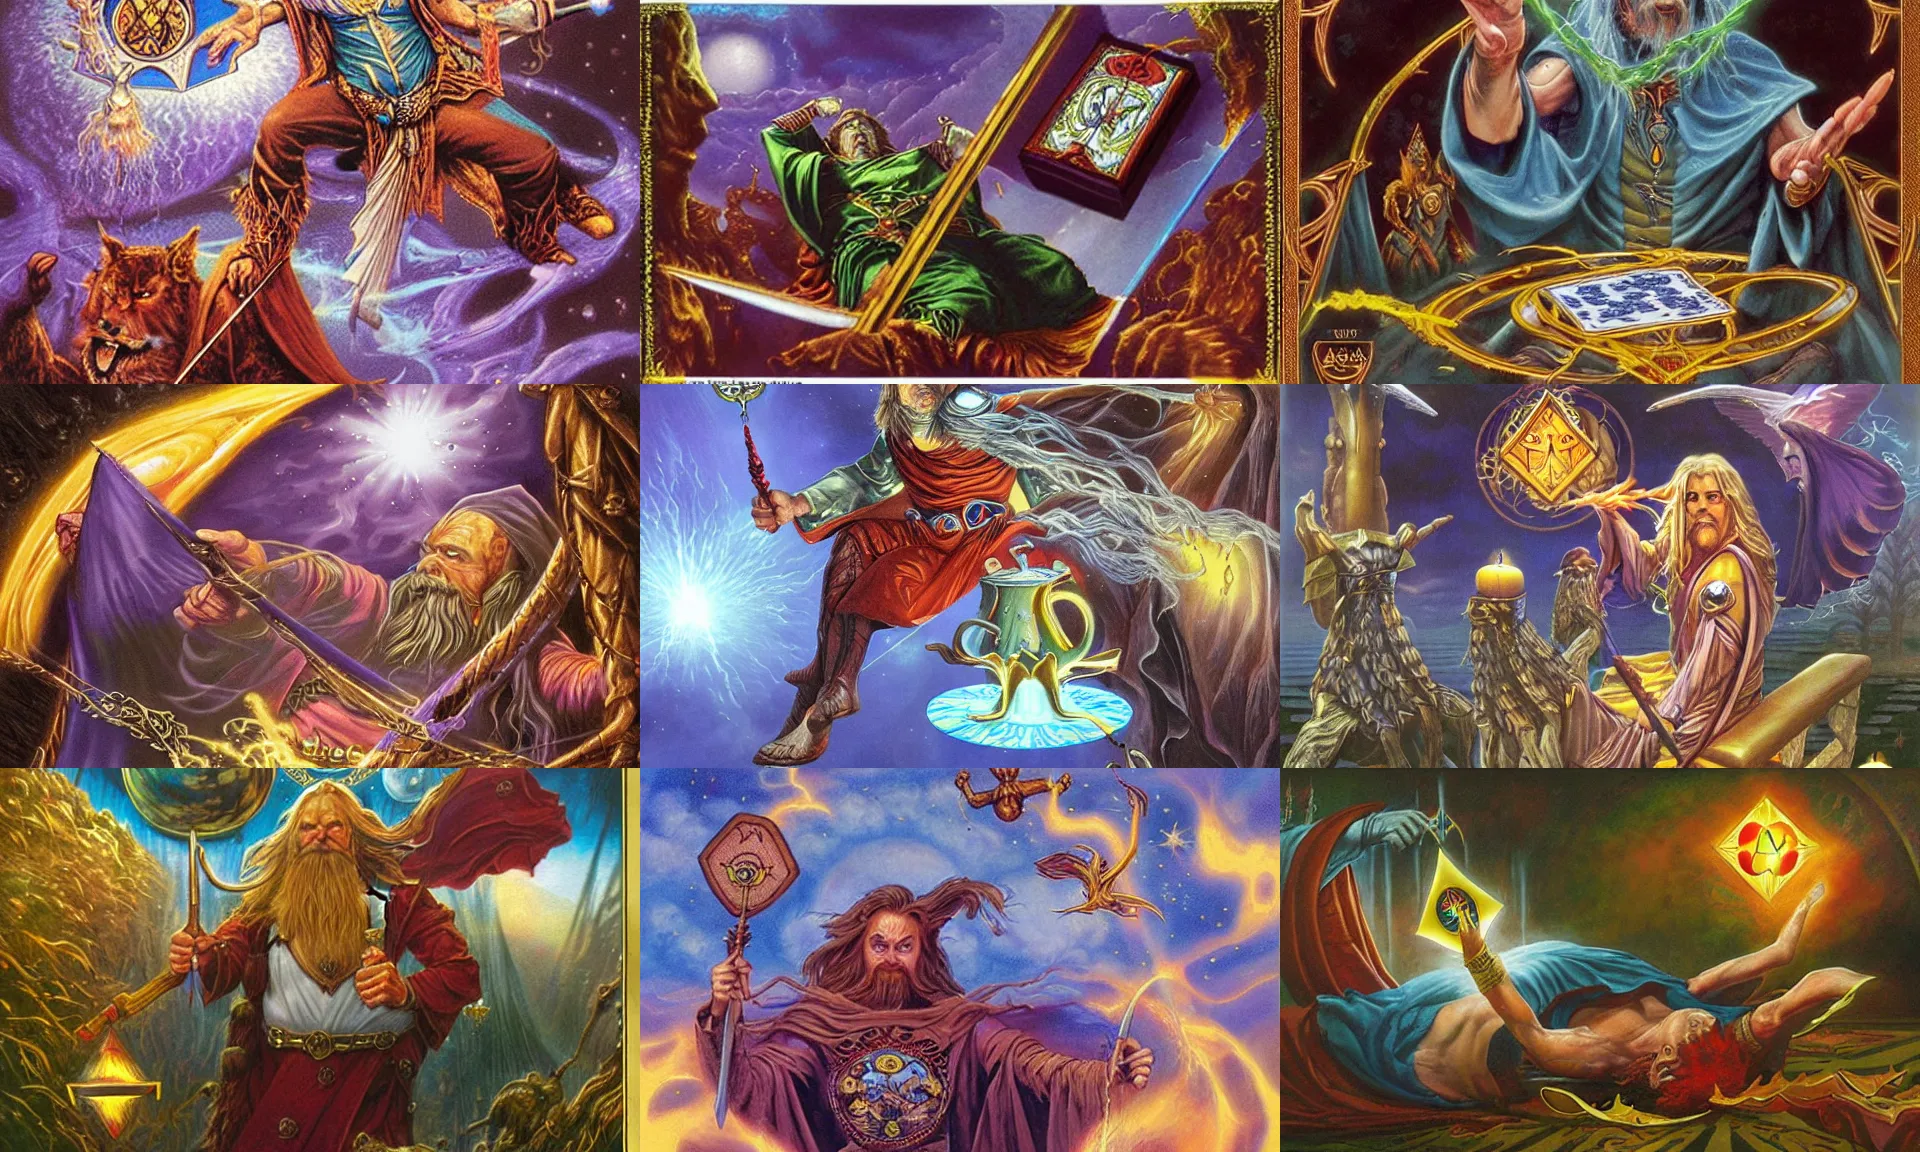 Prompt: wizard, tarot cards floating, award - winning fantasy art by alex horley